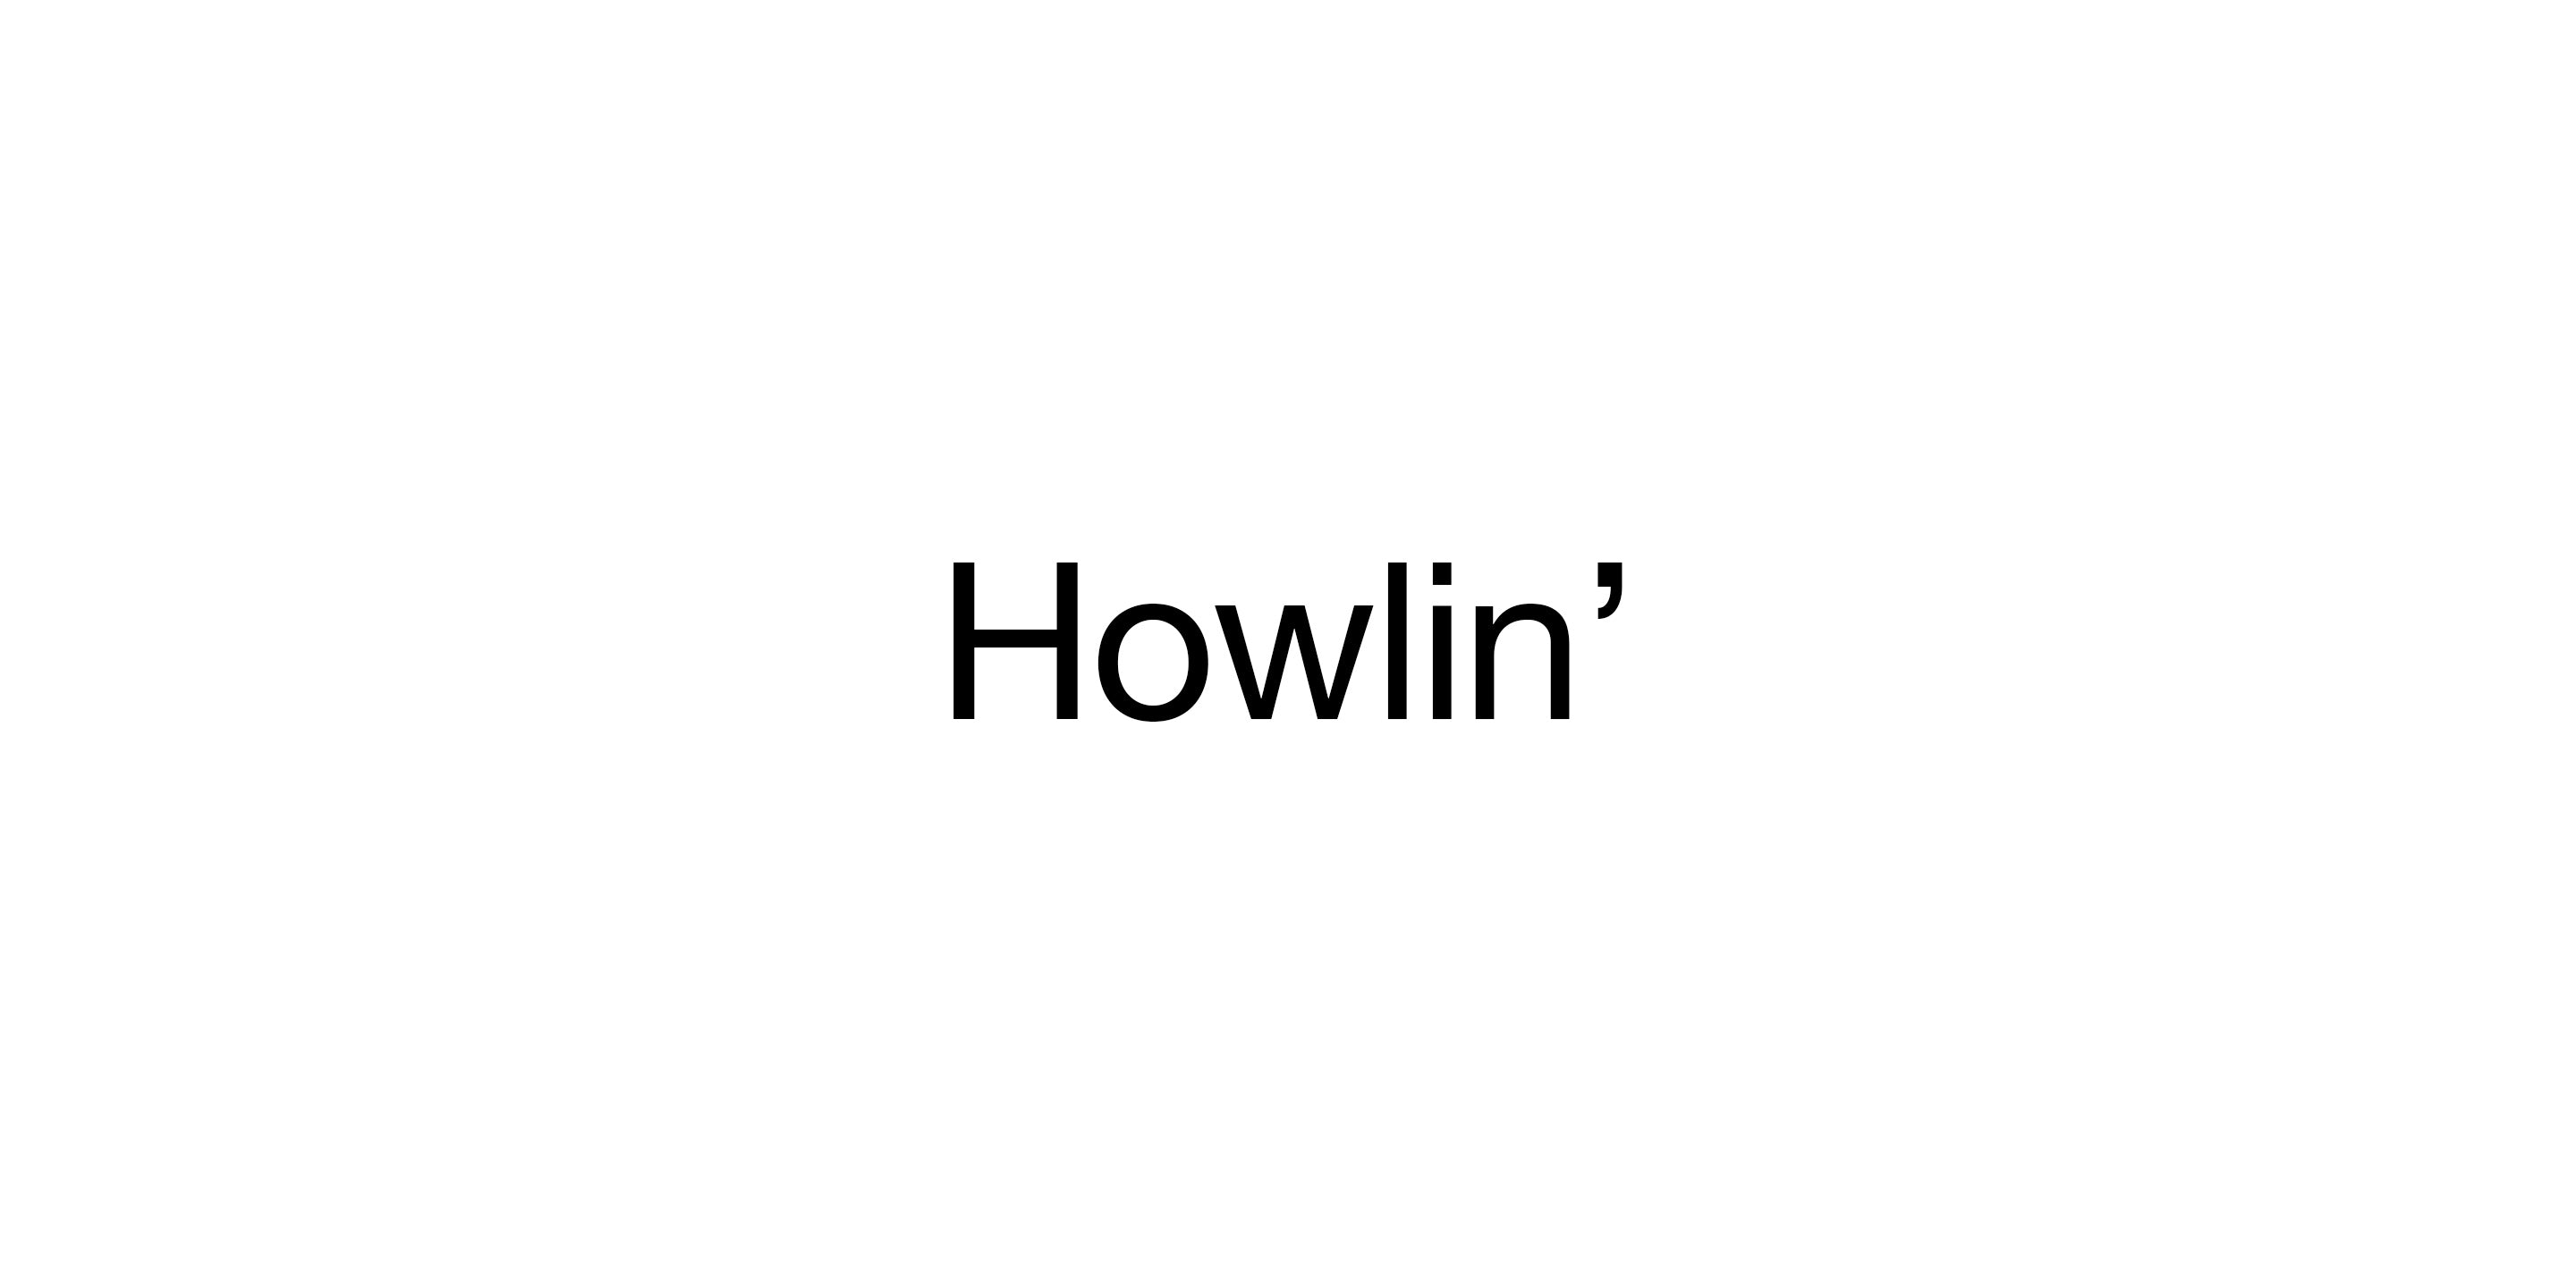 Howlin' – feets